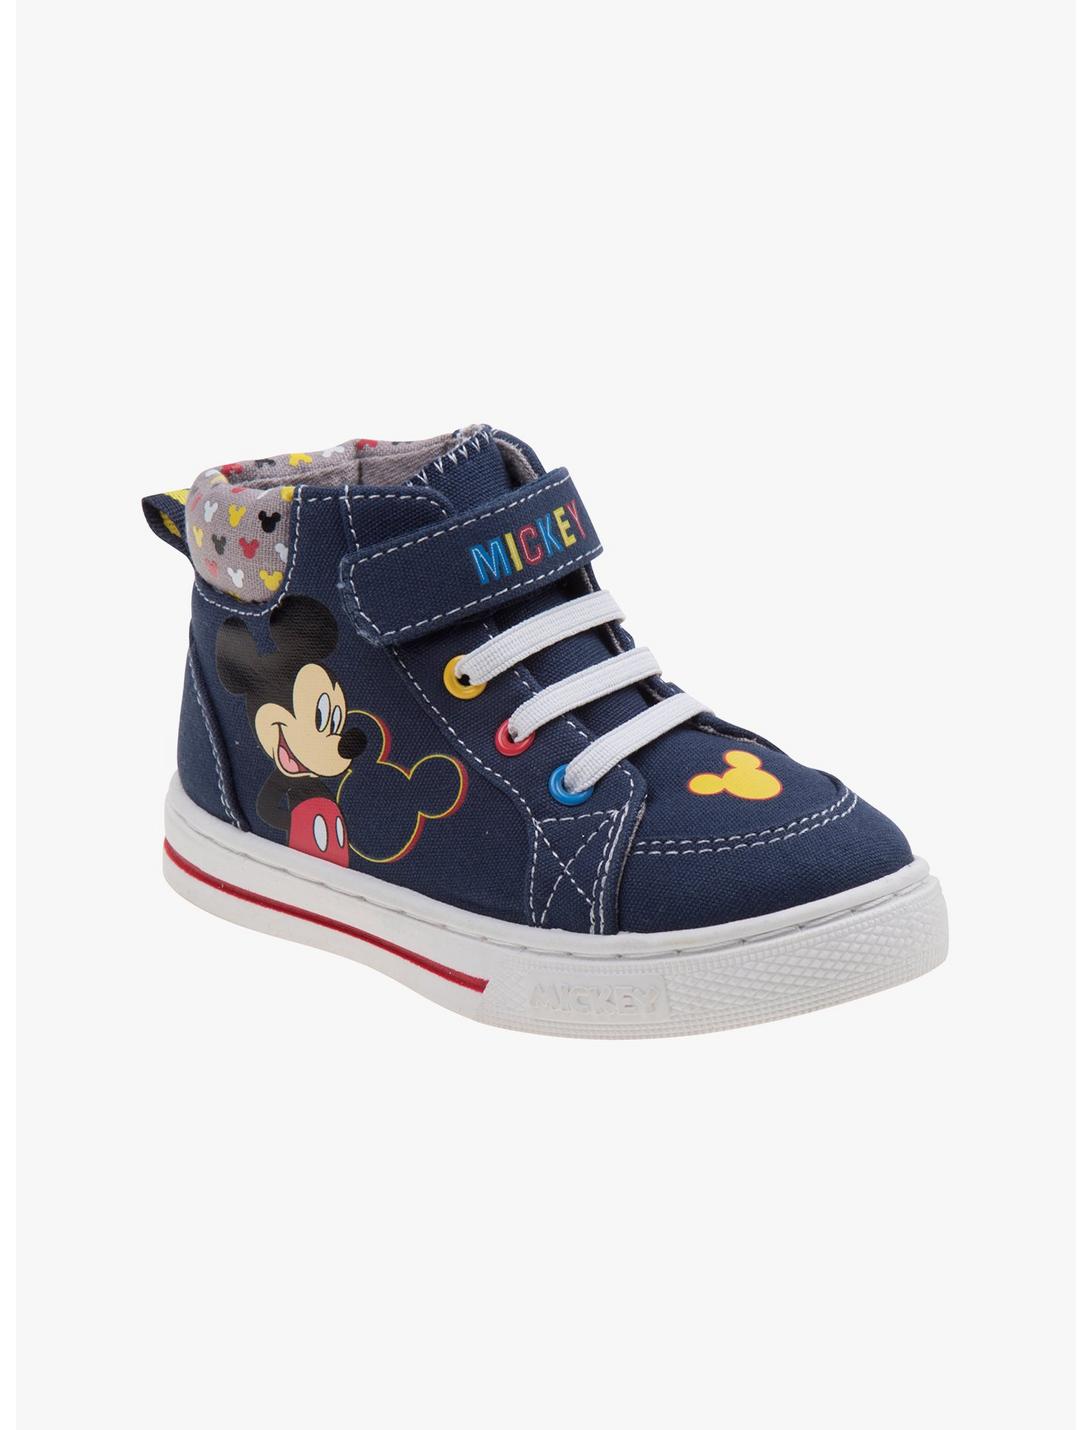 Disney Mickey Mouse Hi-Top Toddler Sneakers, BLUE  NAVY, hi-res